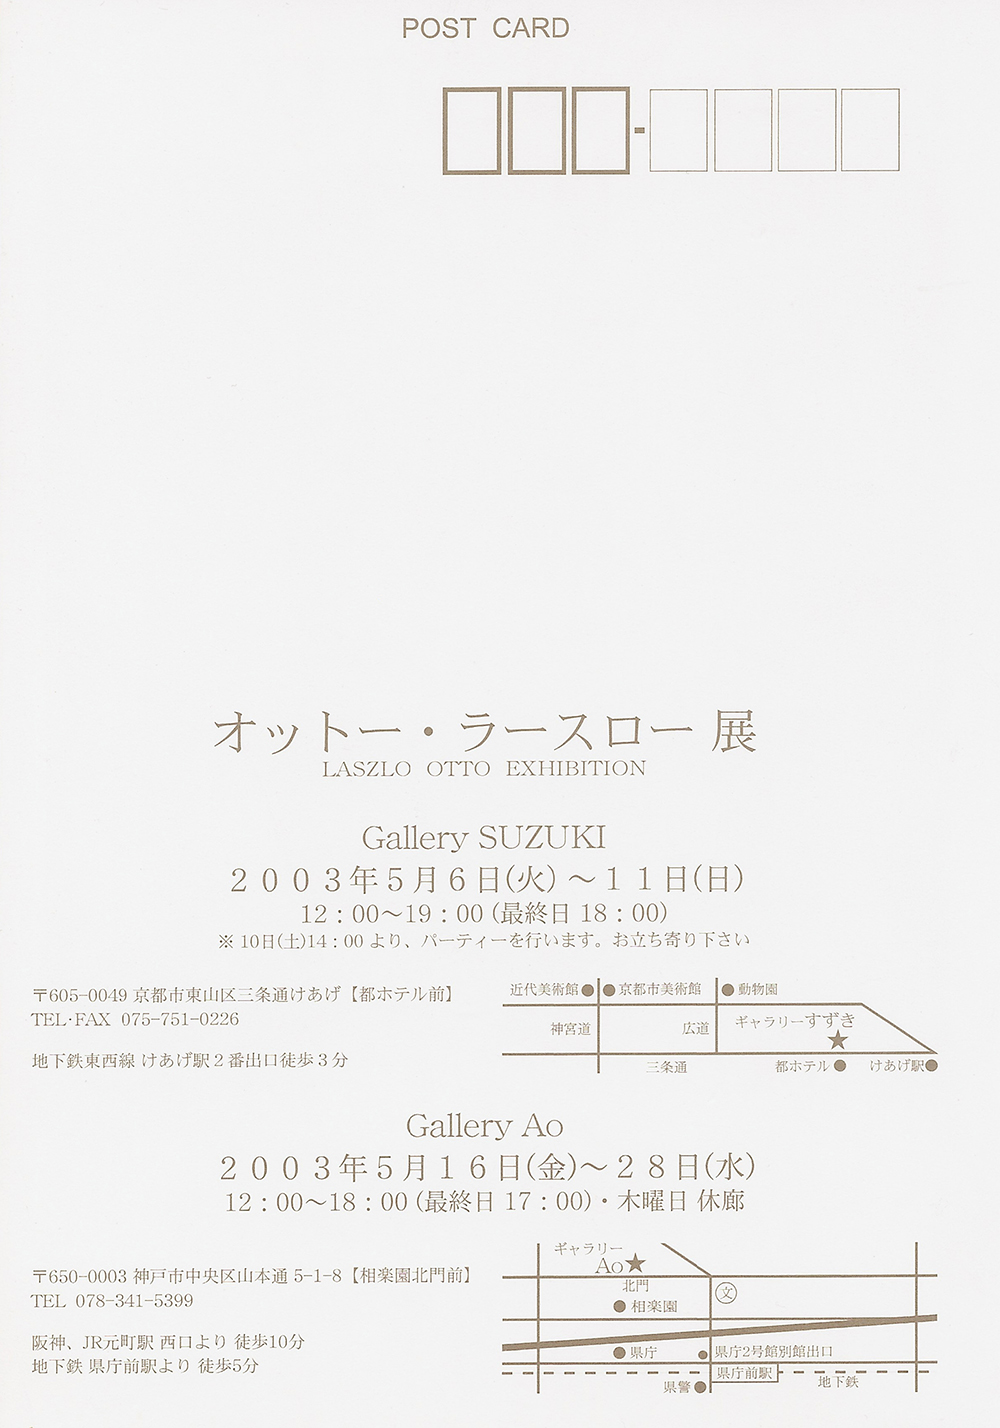 SuzukiGallery-Kyoto_Ao-Kobe_2003-Otto-solo-exhibition_600dpi_2b_1000.jpg